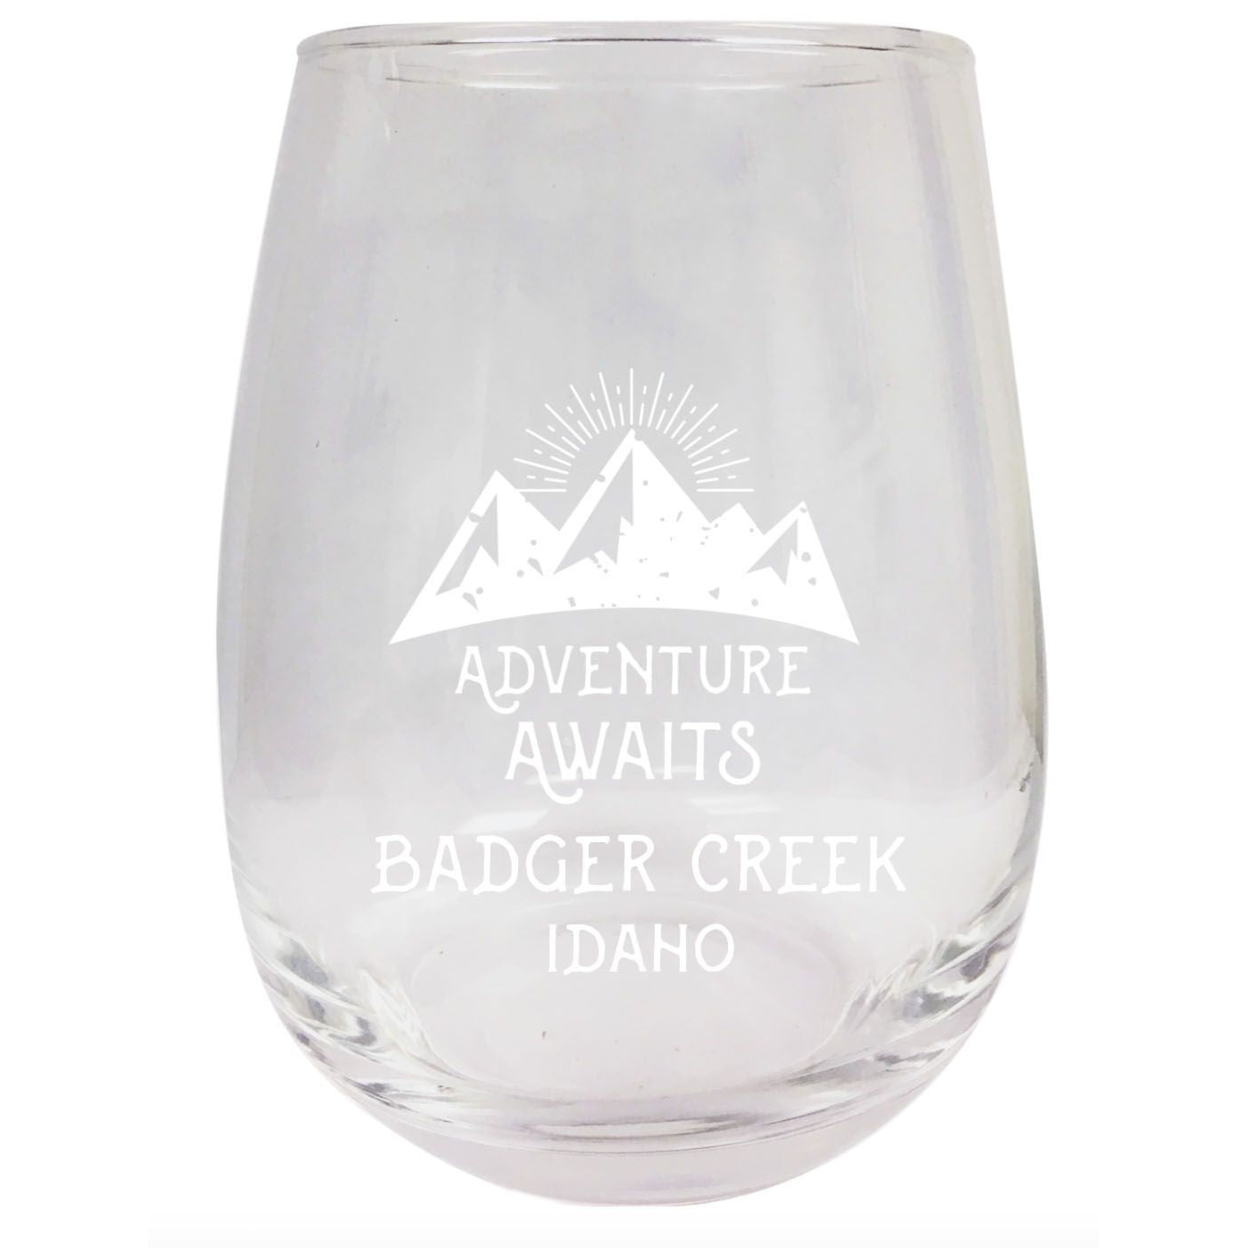 Idaho Engraved Stemless Wine Glass Duo